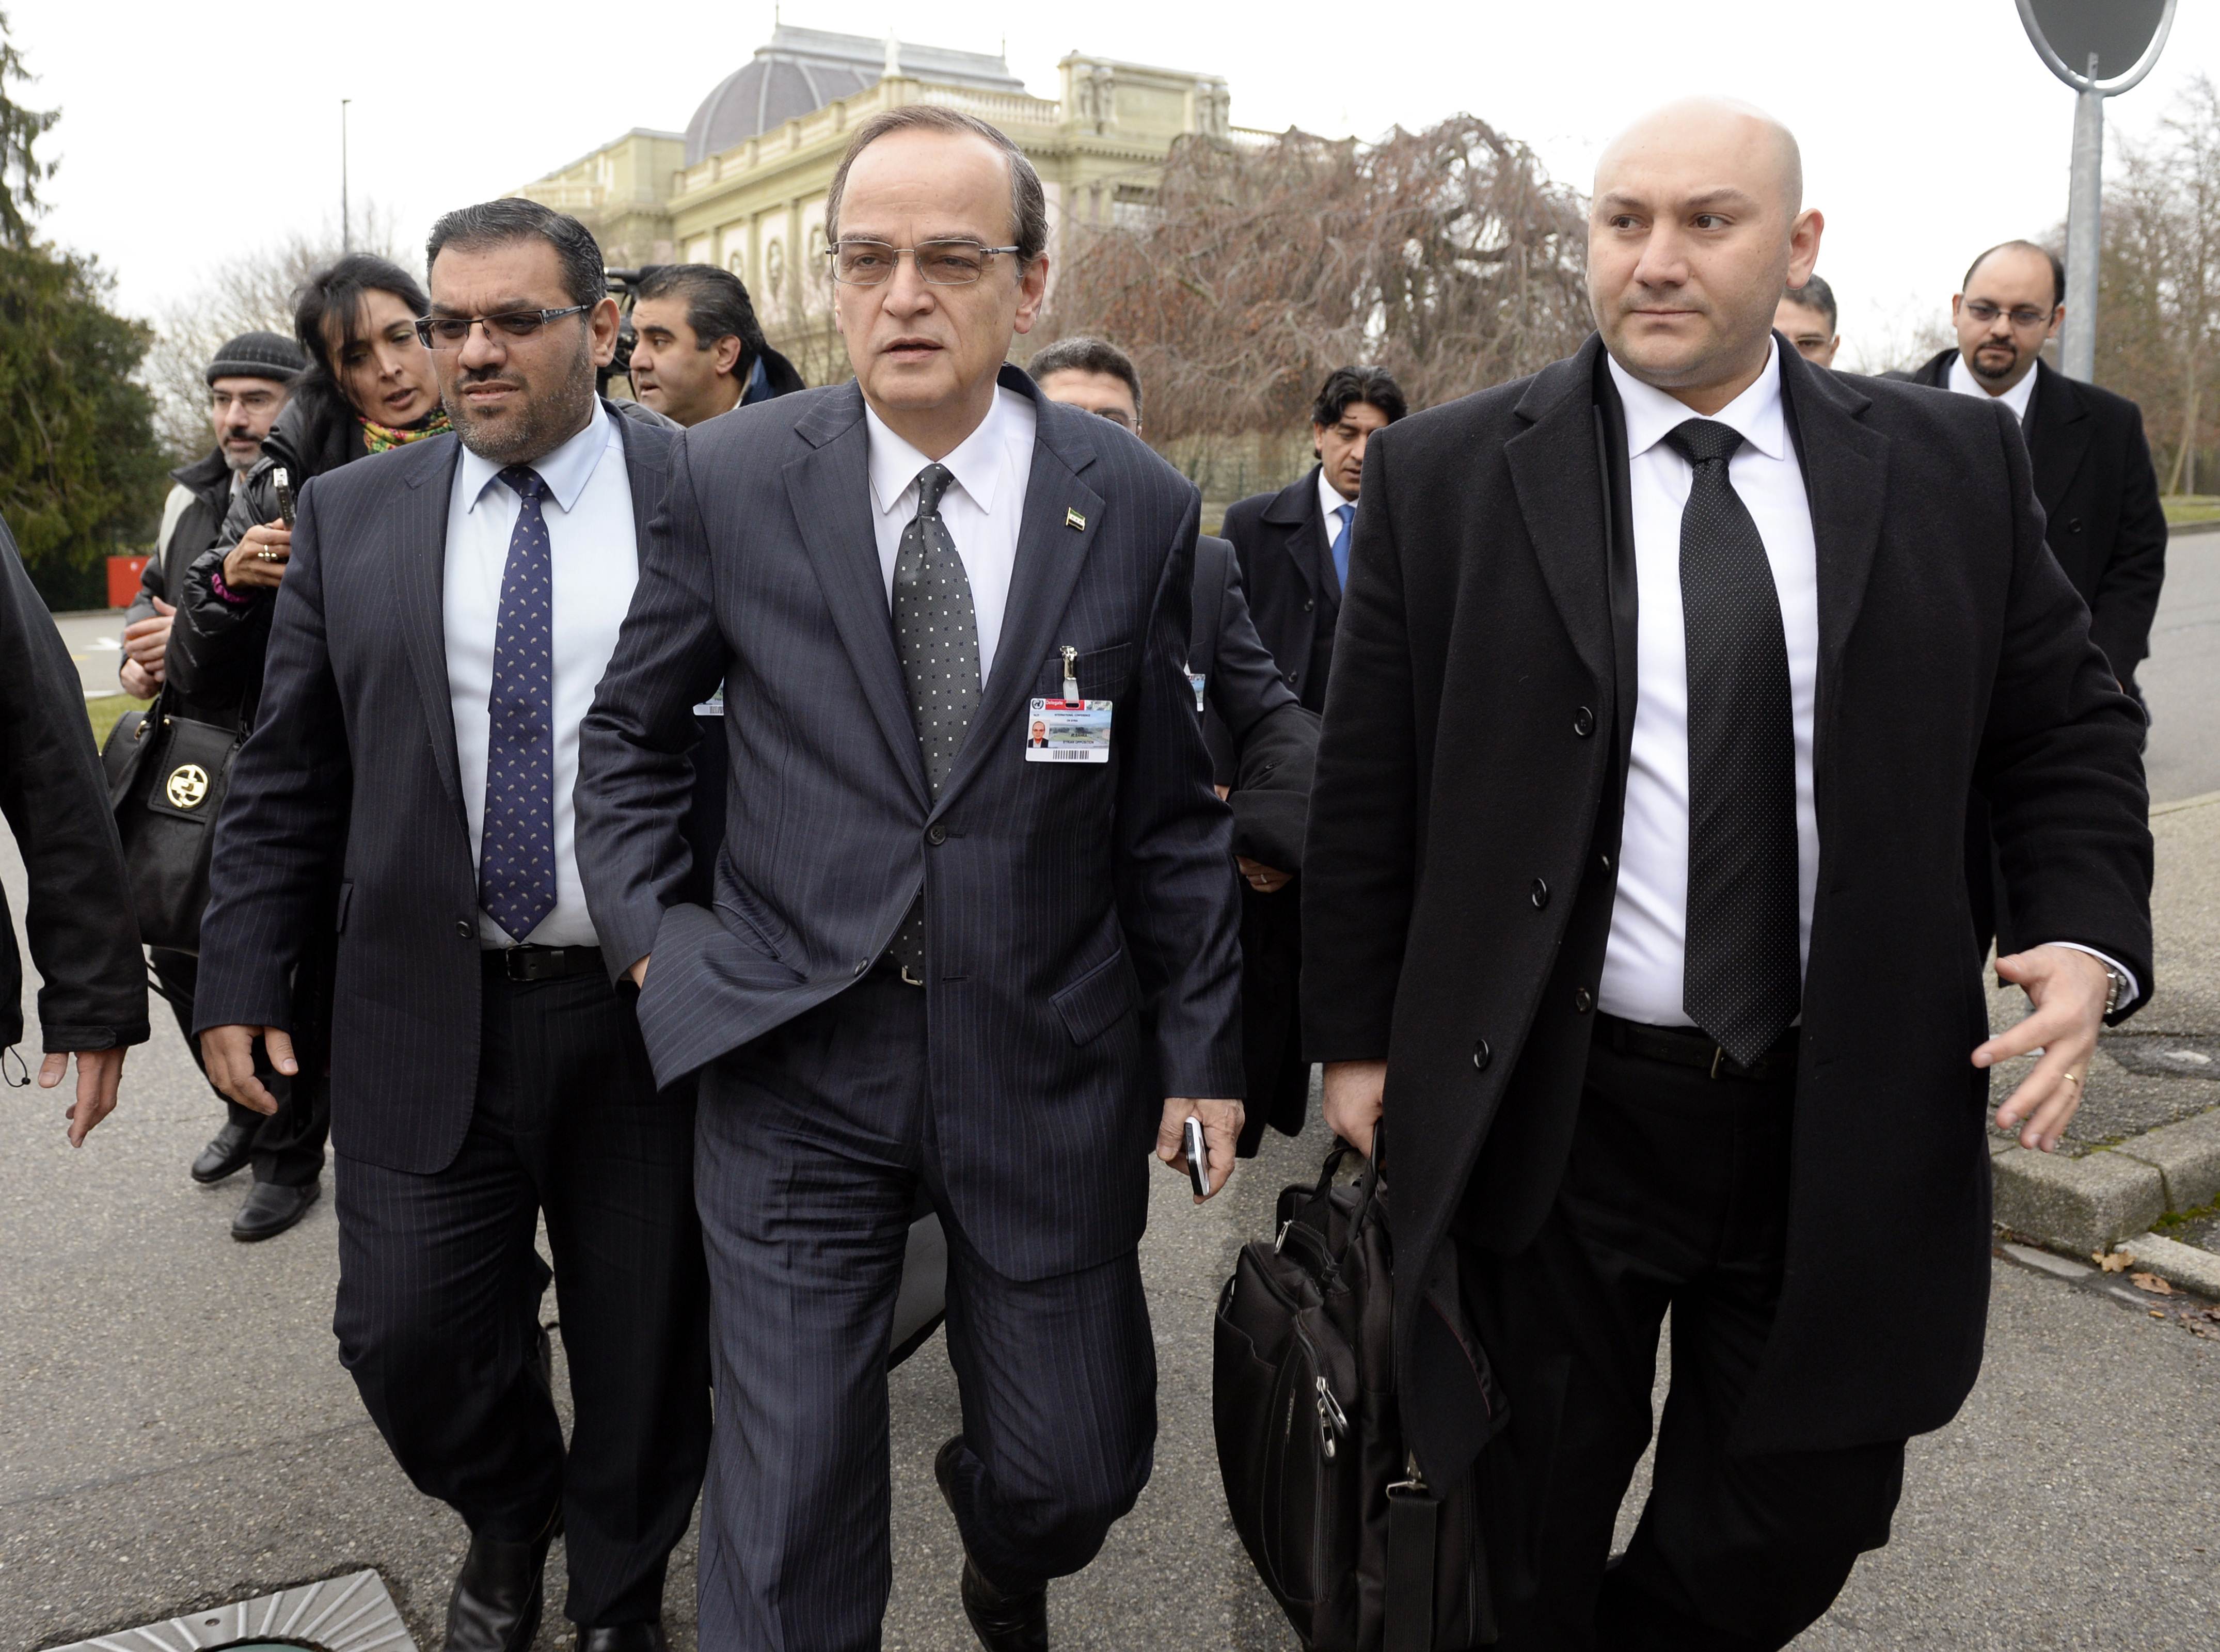 Syrian opposition chief negotiator Hadi al-Bahra (centre) arrives at the Geneva II peace talks on Saturday. Photo: AFP